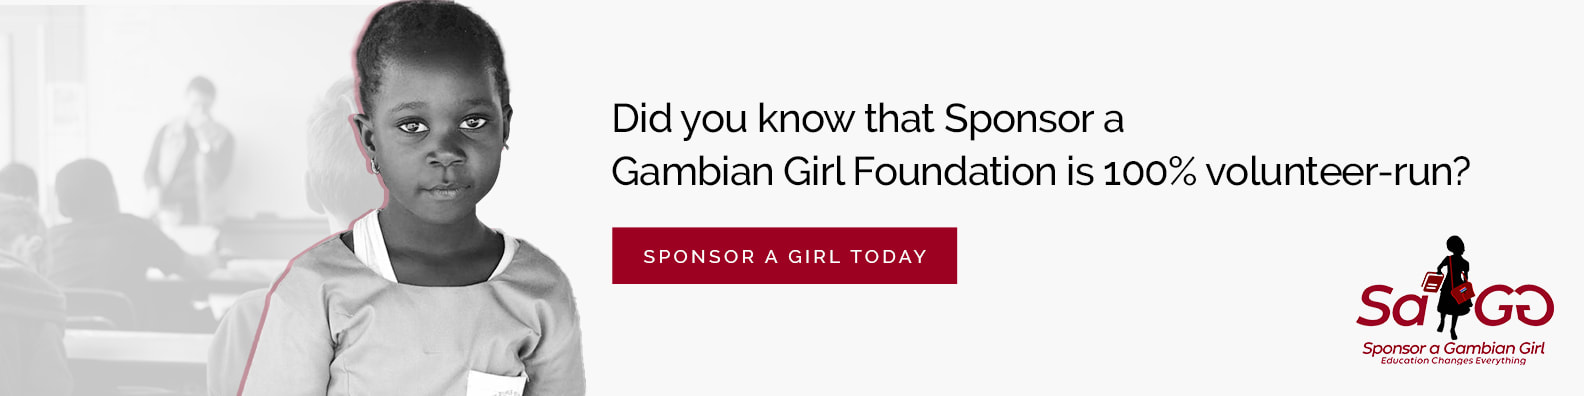 Sponsor a Gambian Girl